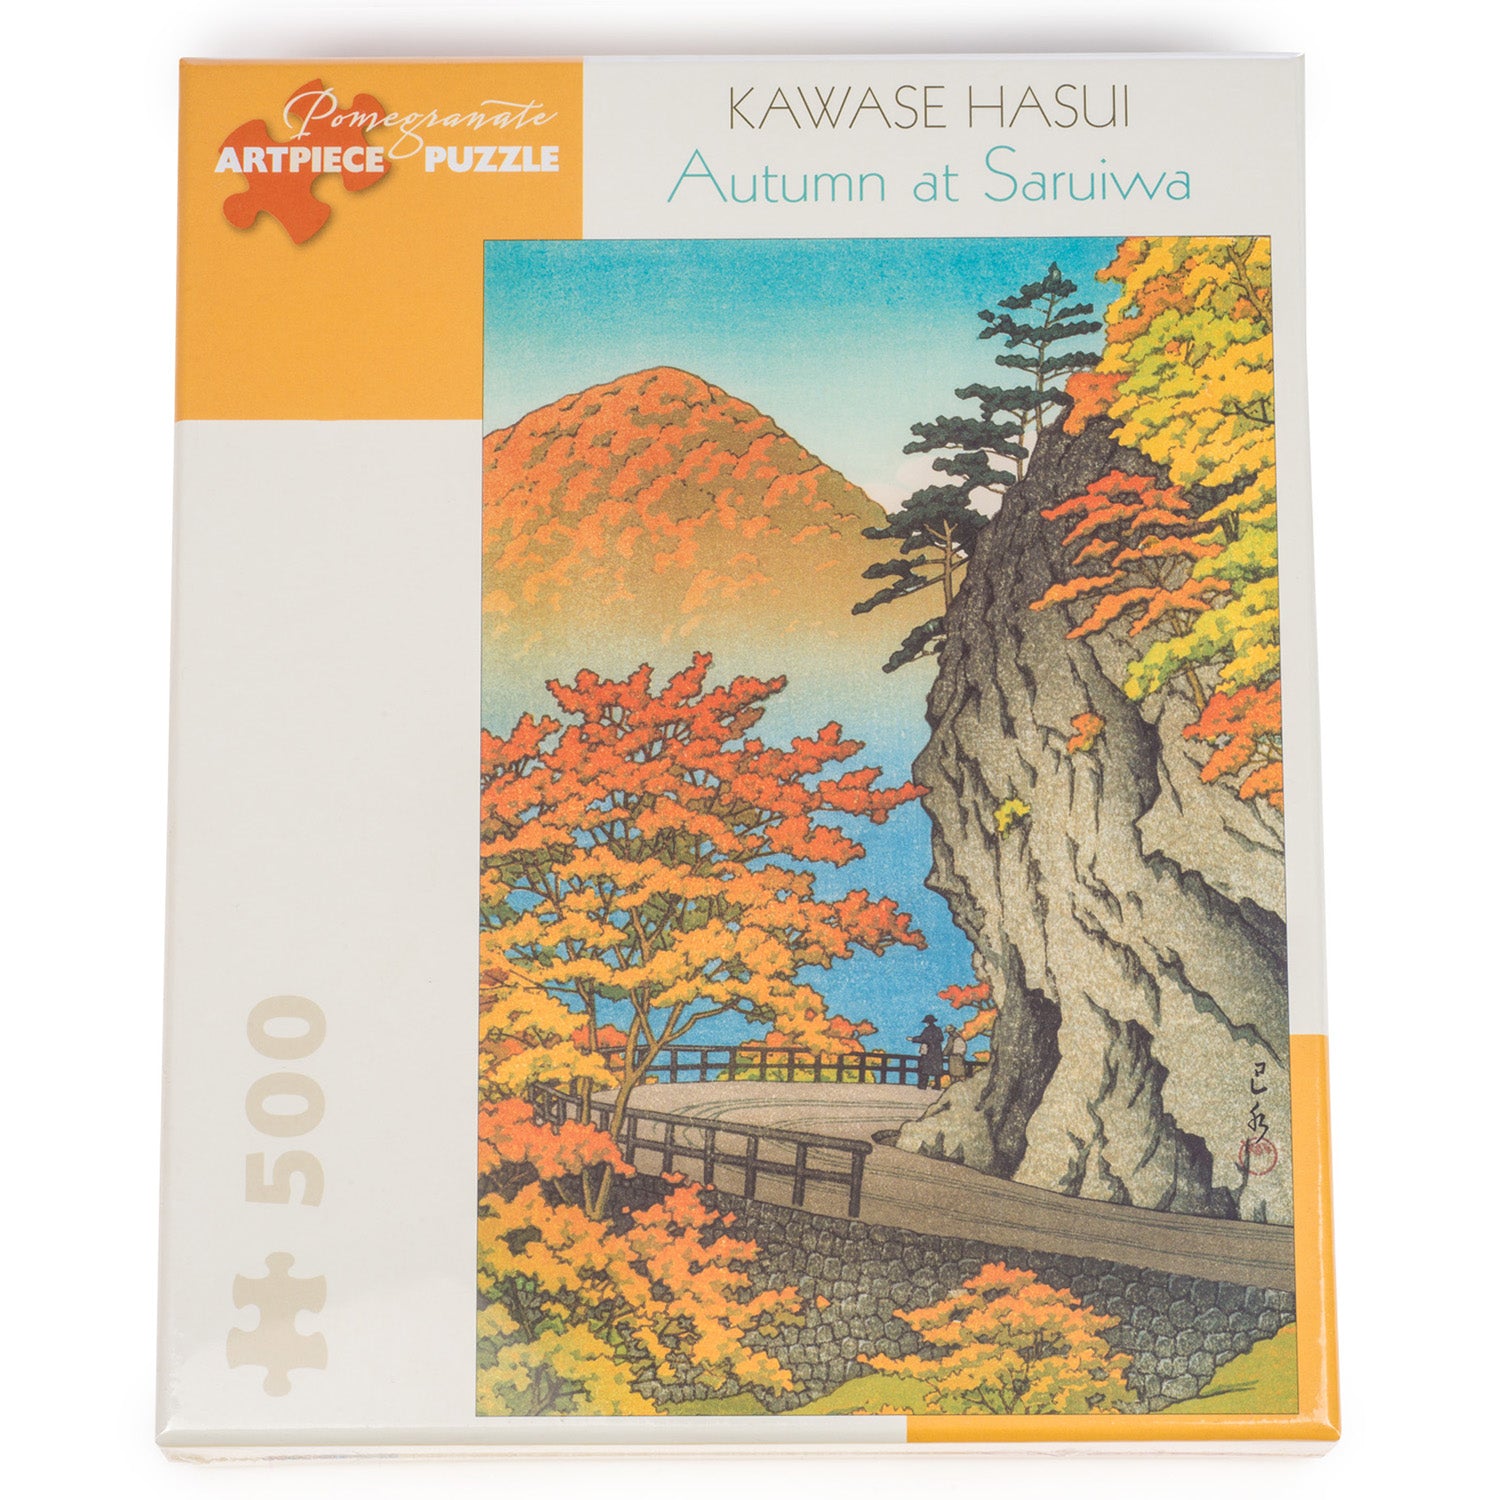 Kawase Autumn 500 pce Japanese Puzzle